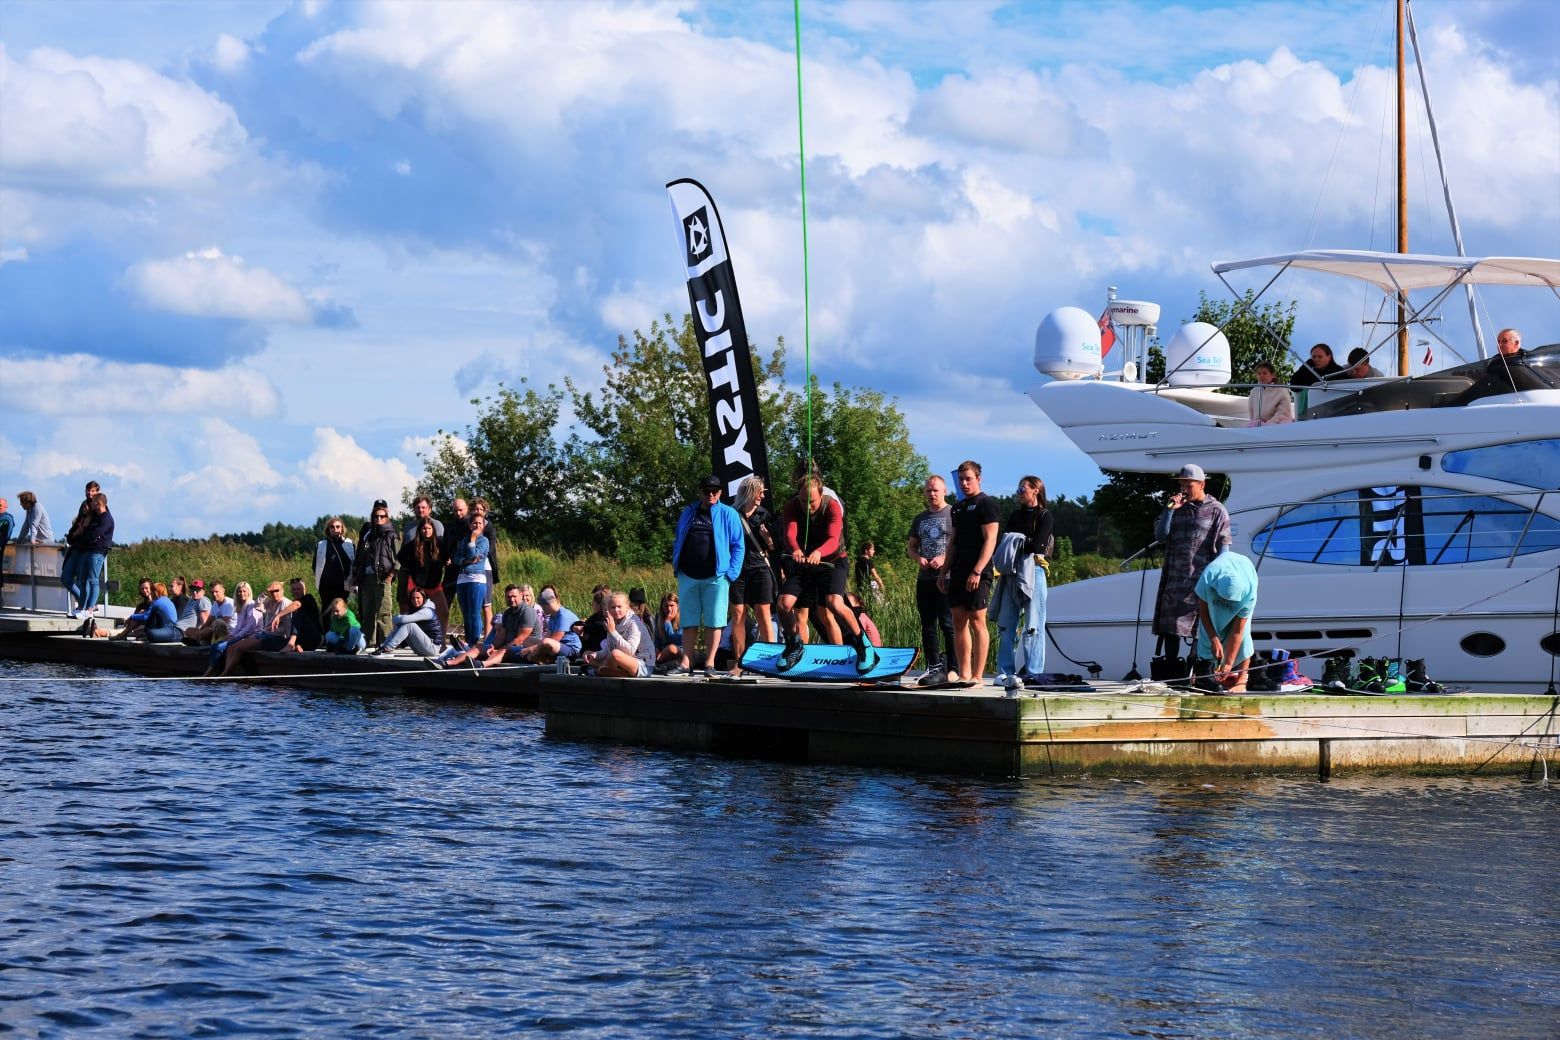 Latvian Boat Wakeboard Championship 2021